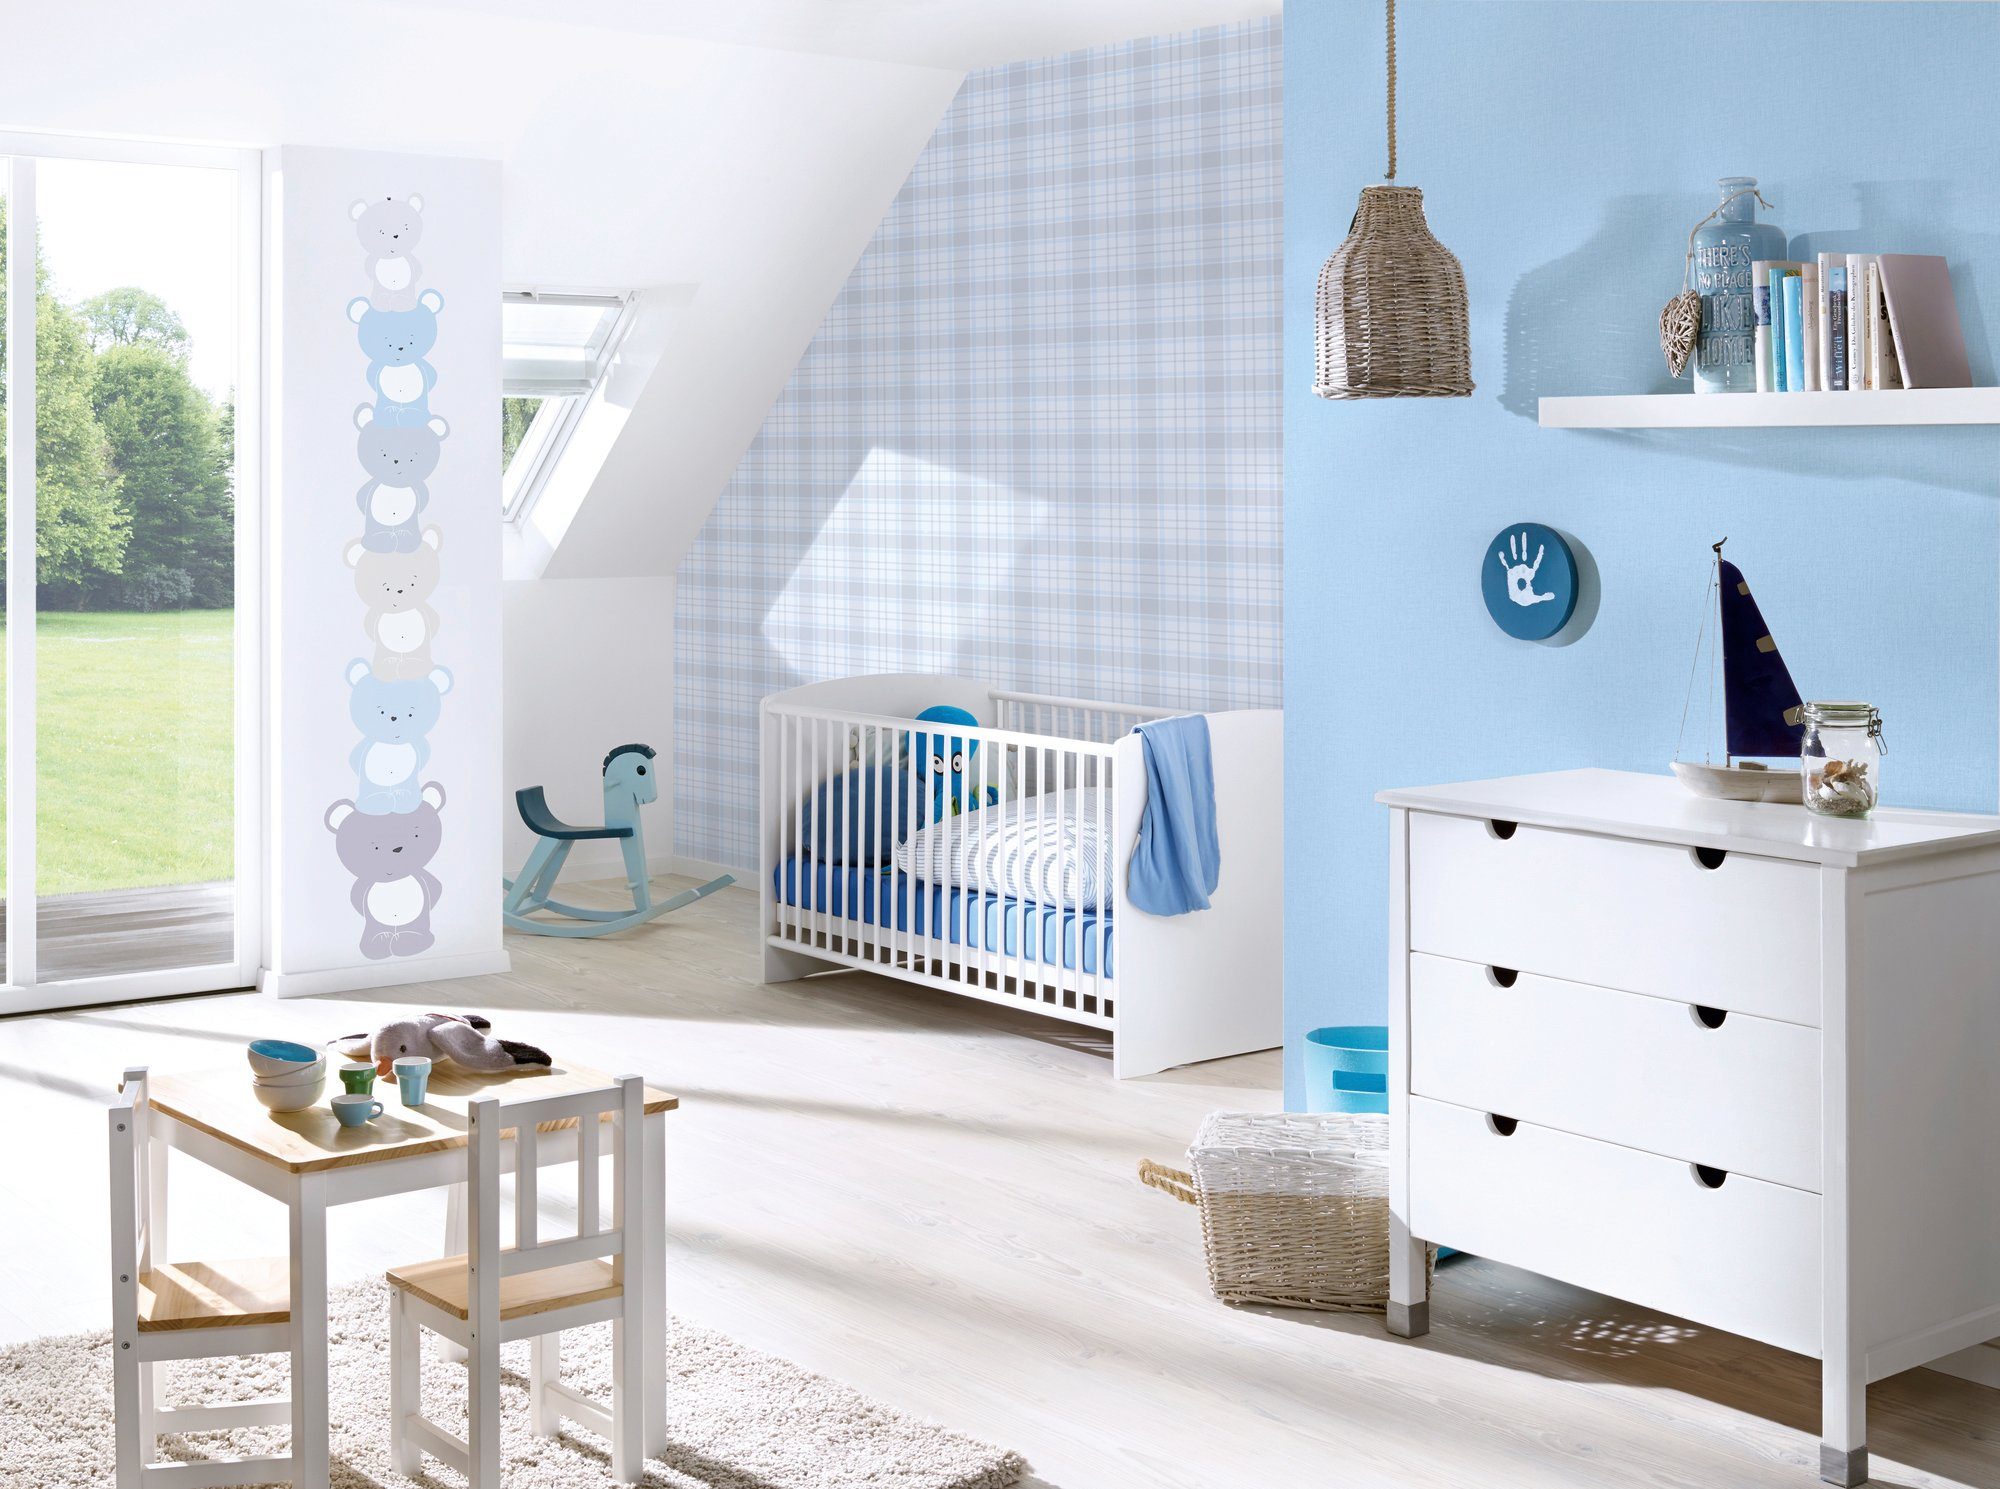 Kinderzimmer glatt, kariert, A.S. Création Vliestapete Love, blau/grau/weiß Tapete Little